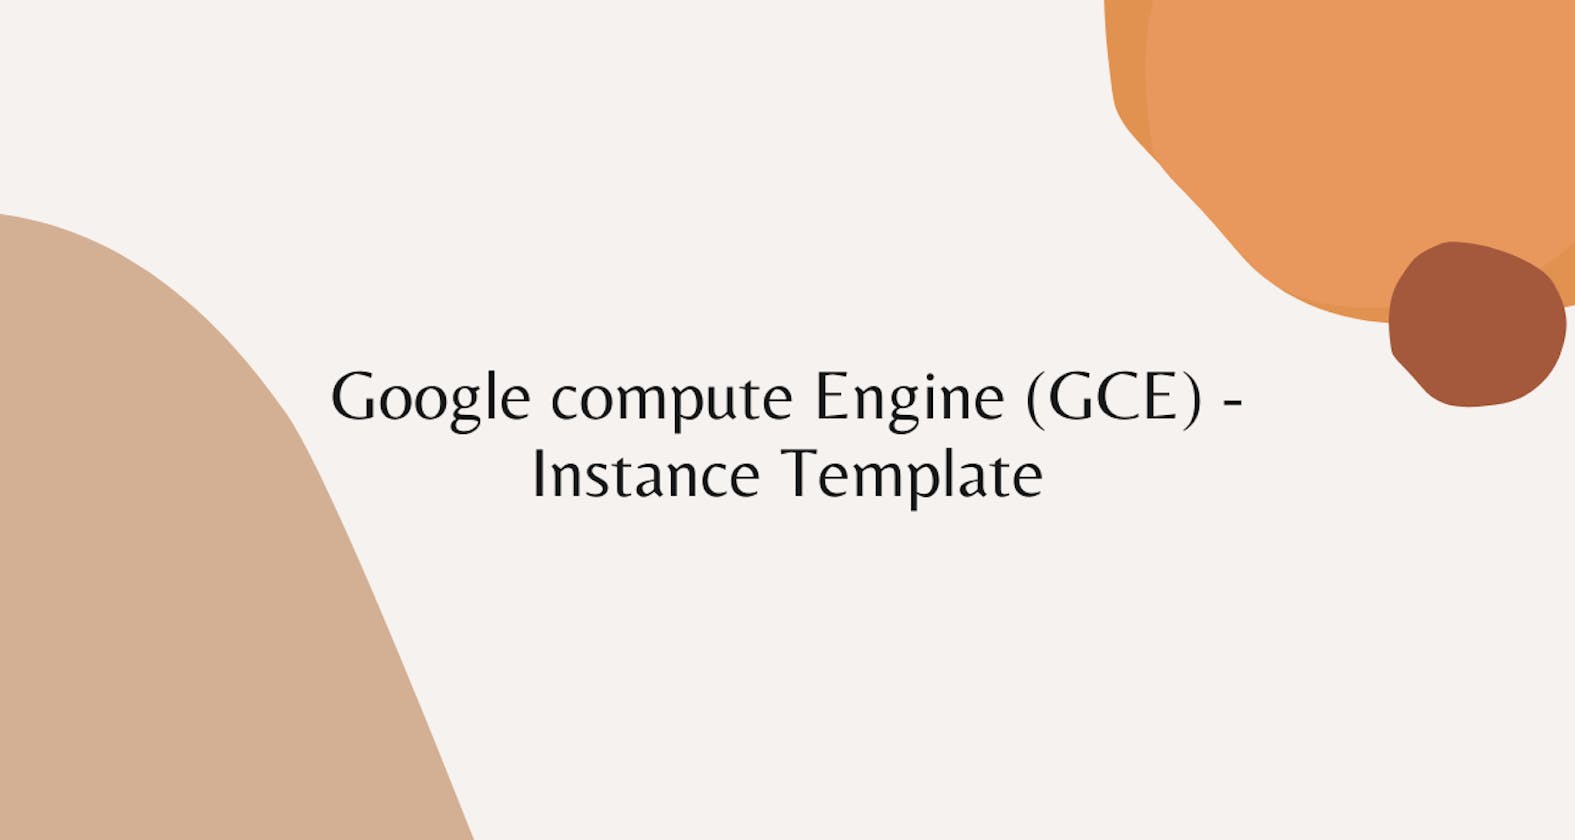 Google compute Engine (GCE) - Instance Template